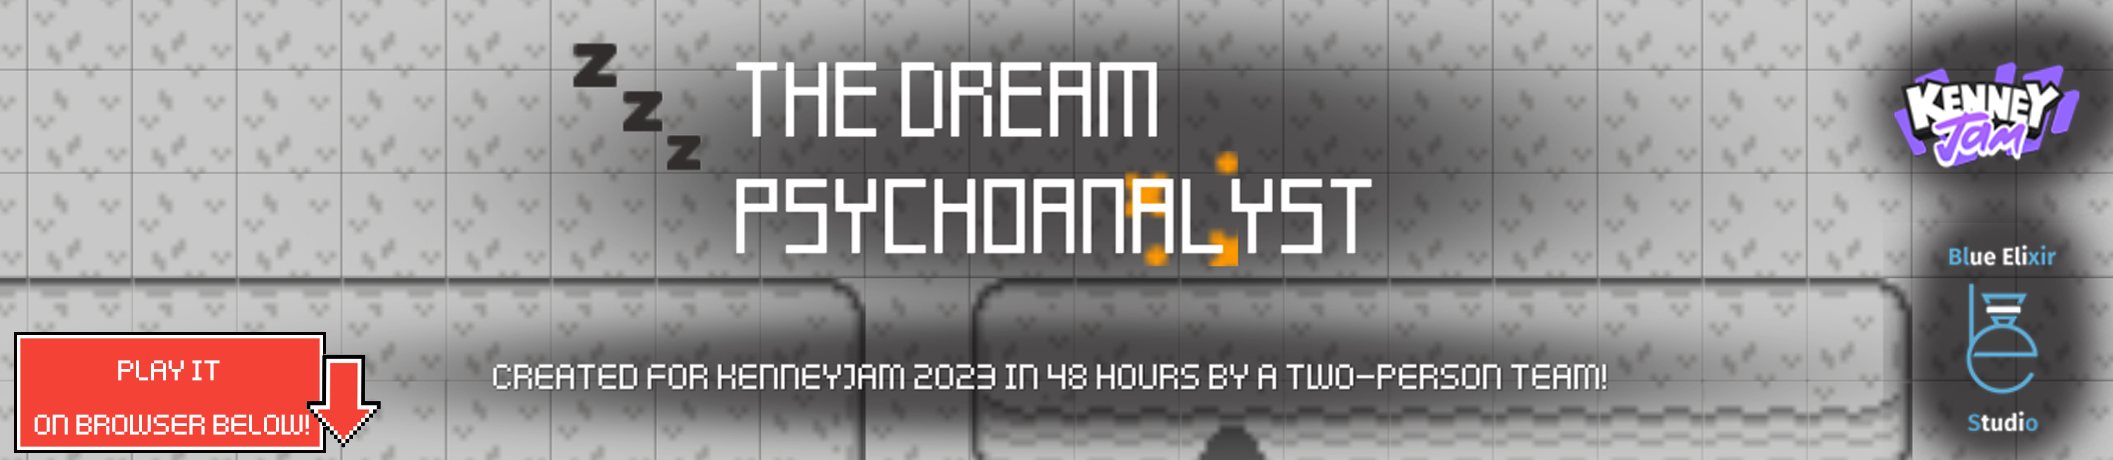 The Dream Psychoanalyst